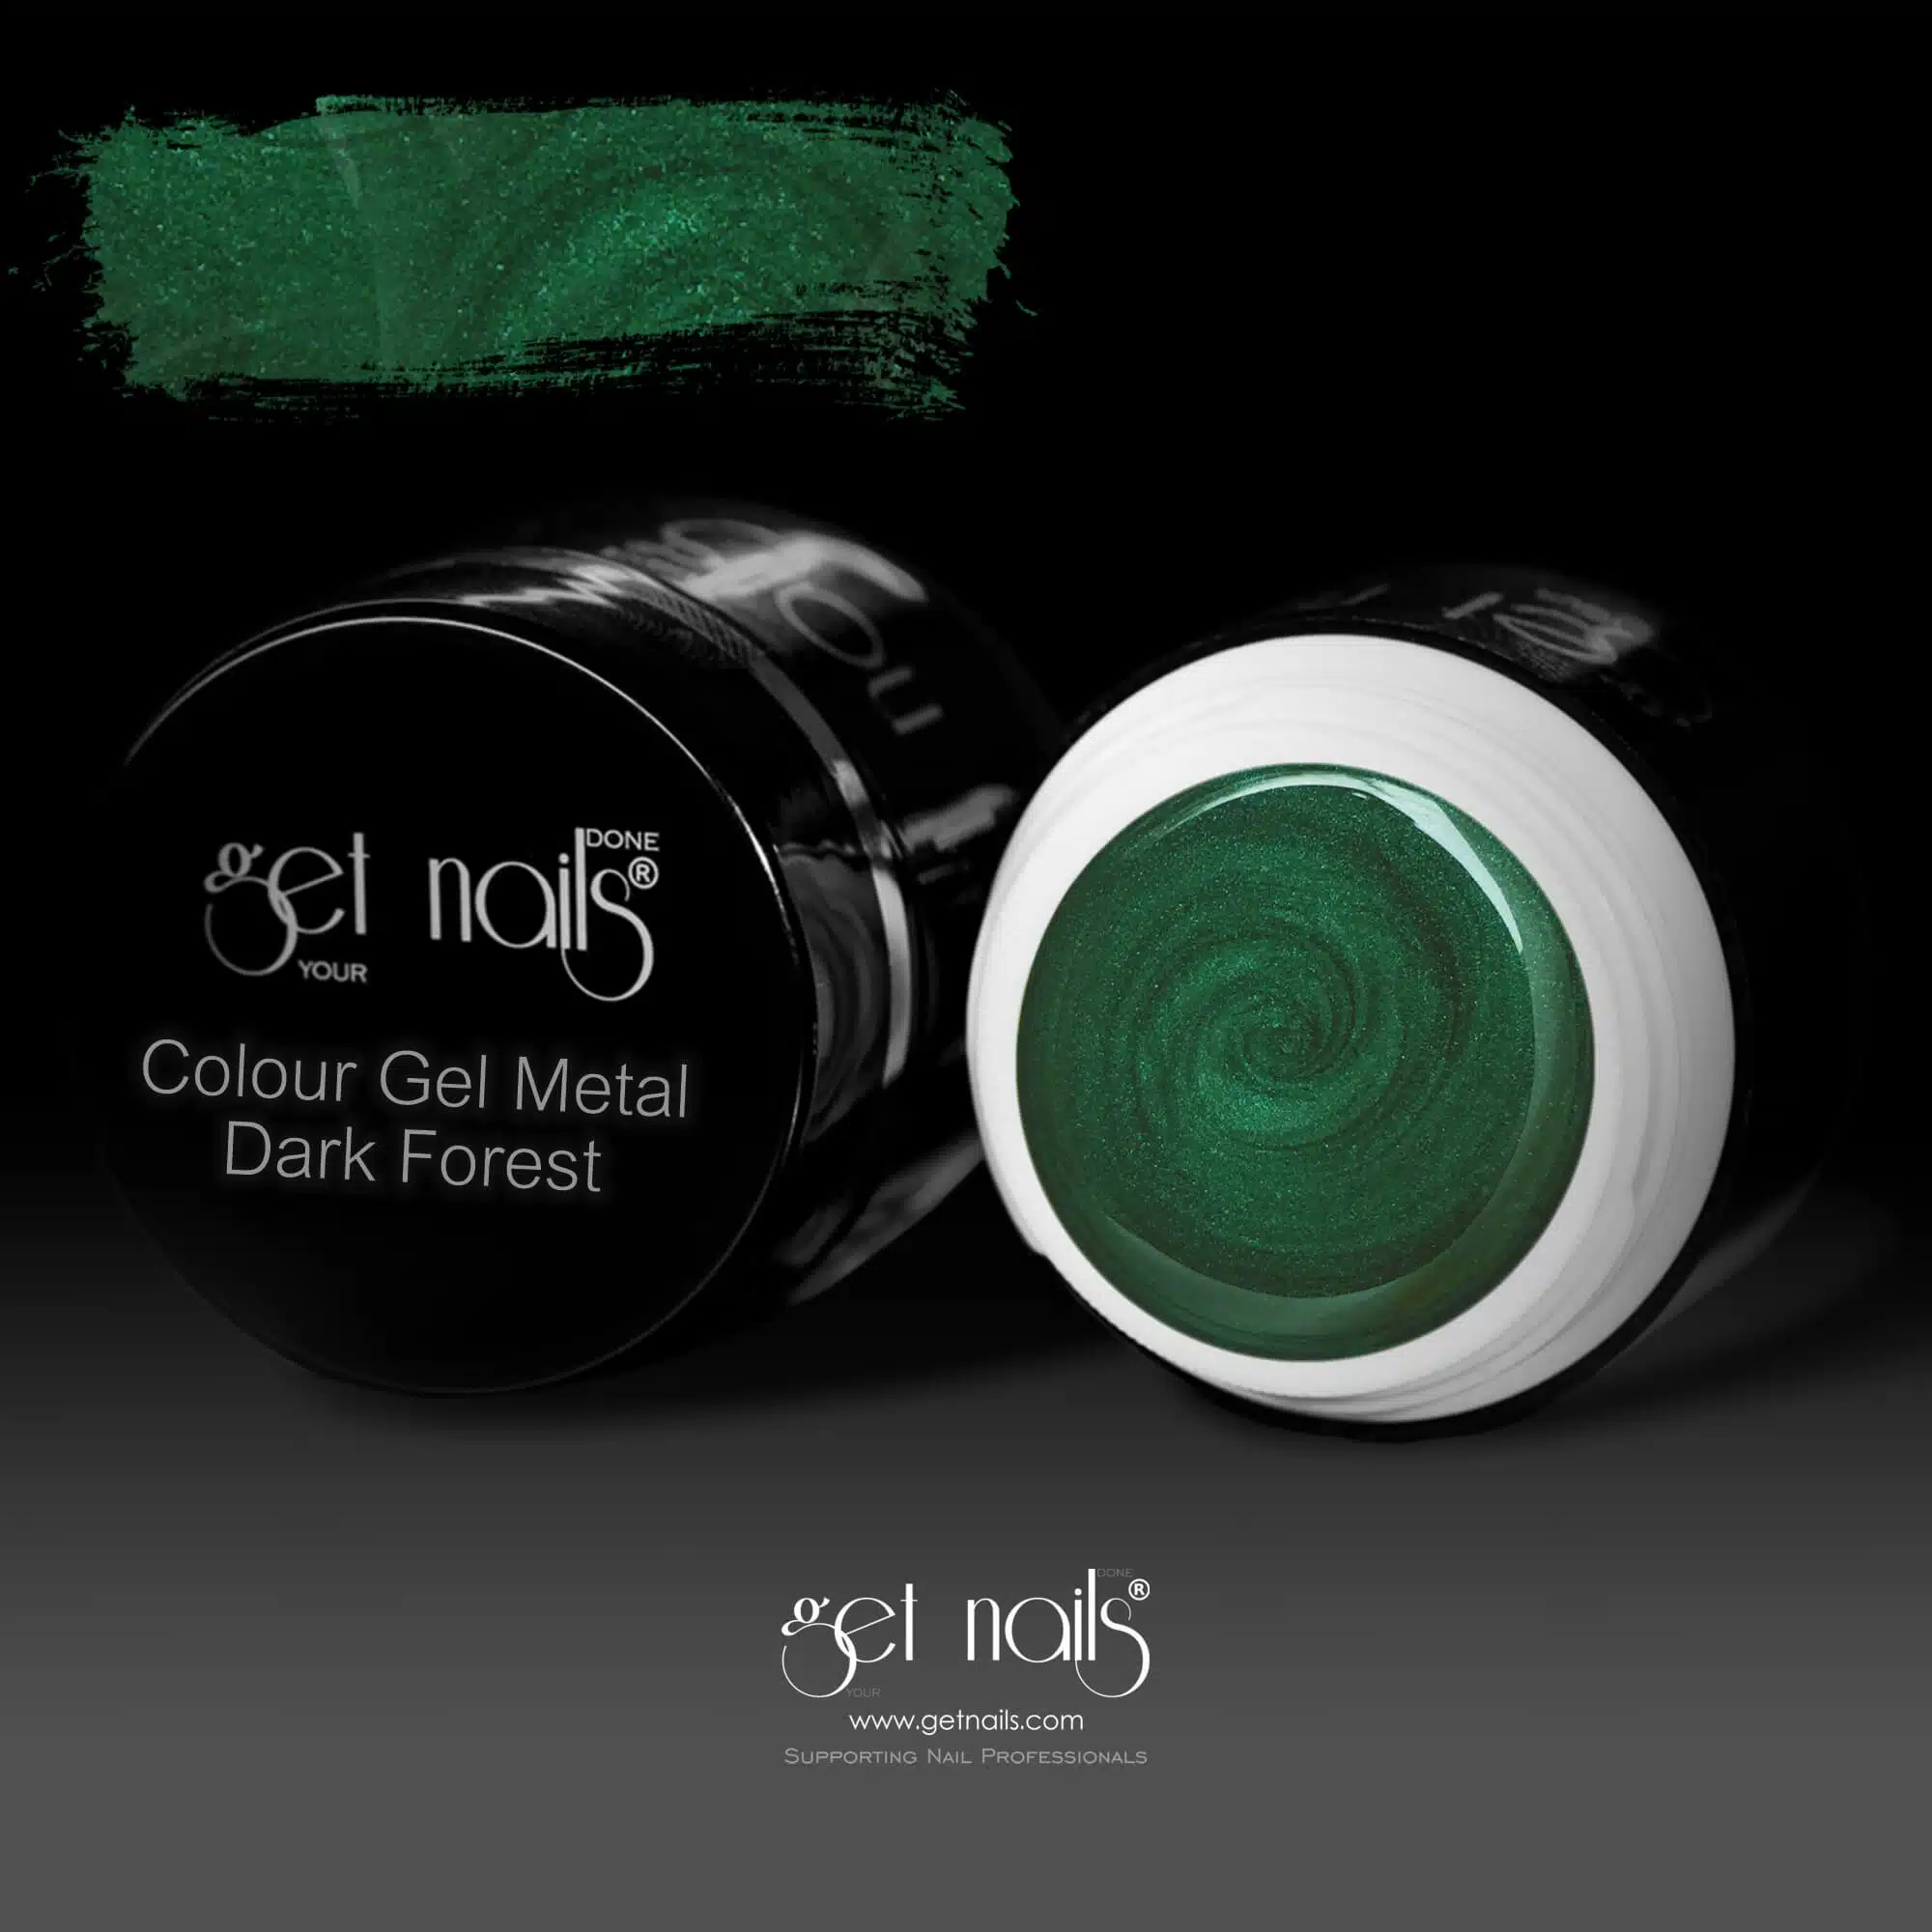 Get Nails Austria - Gel colorato Metal Dark Forest 5g